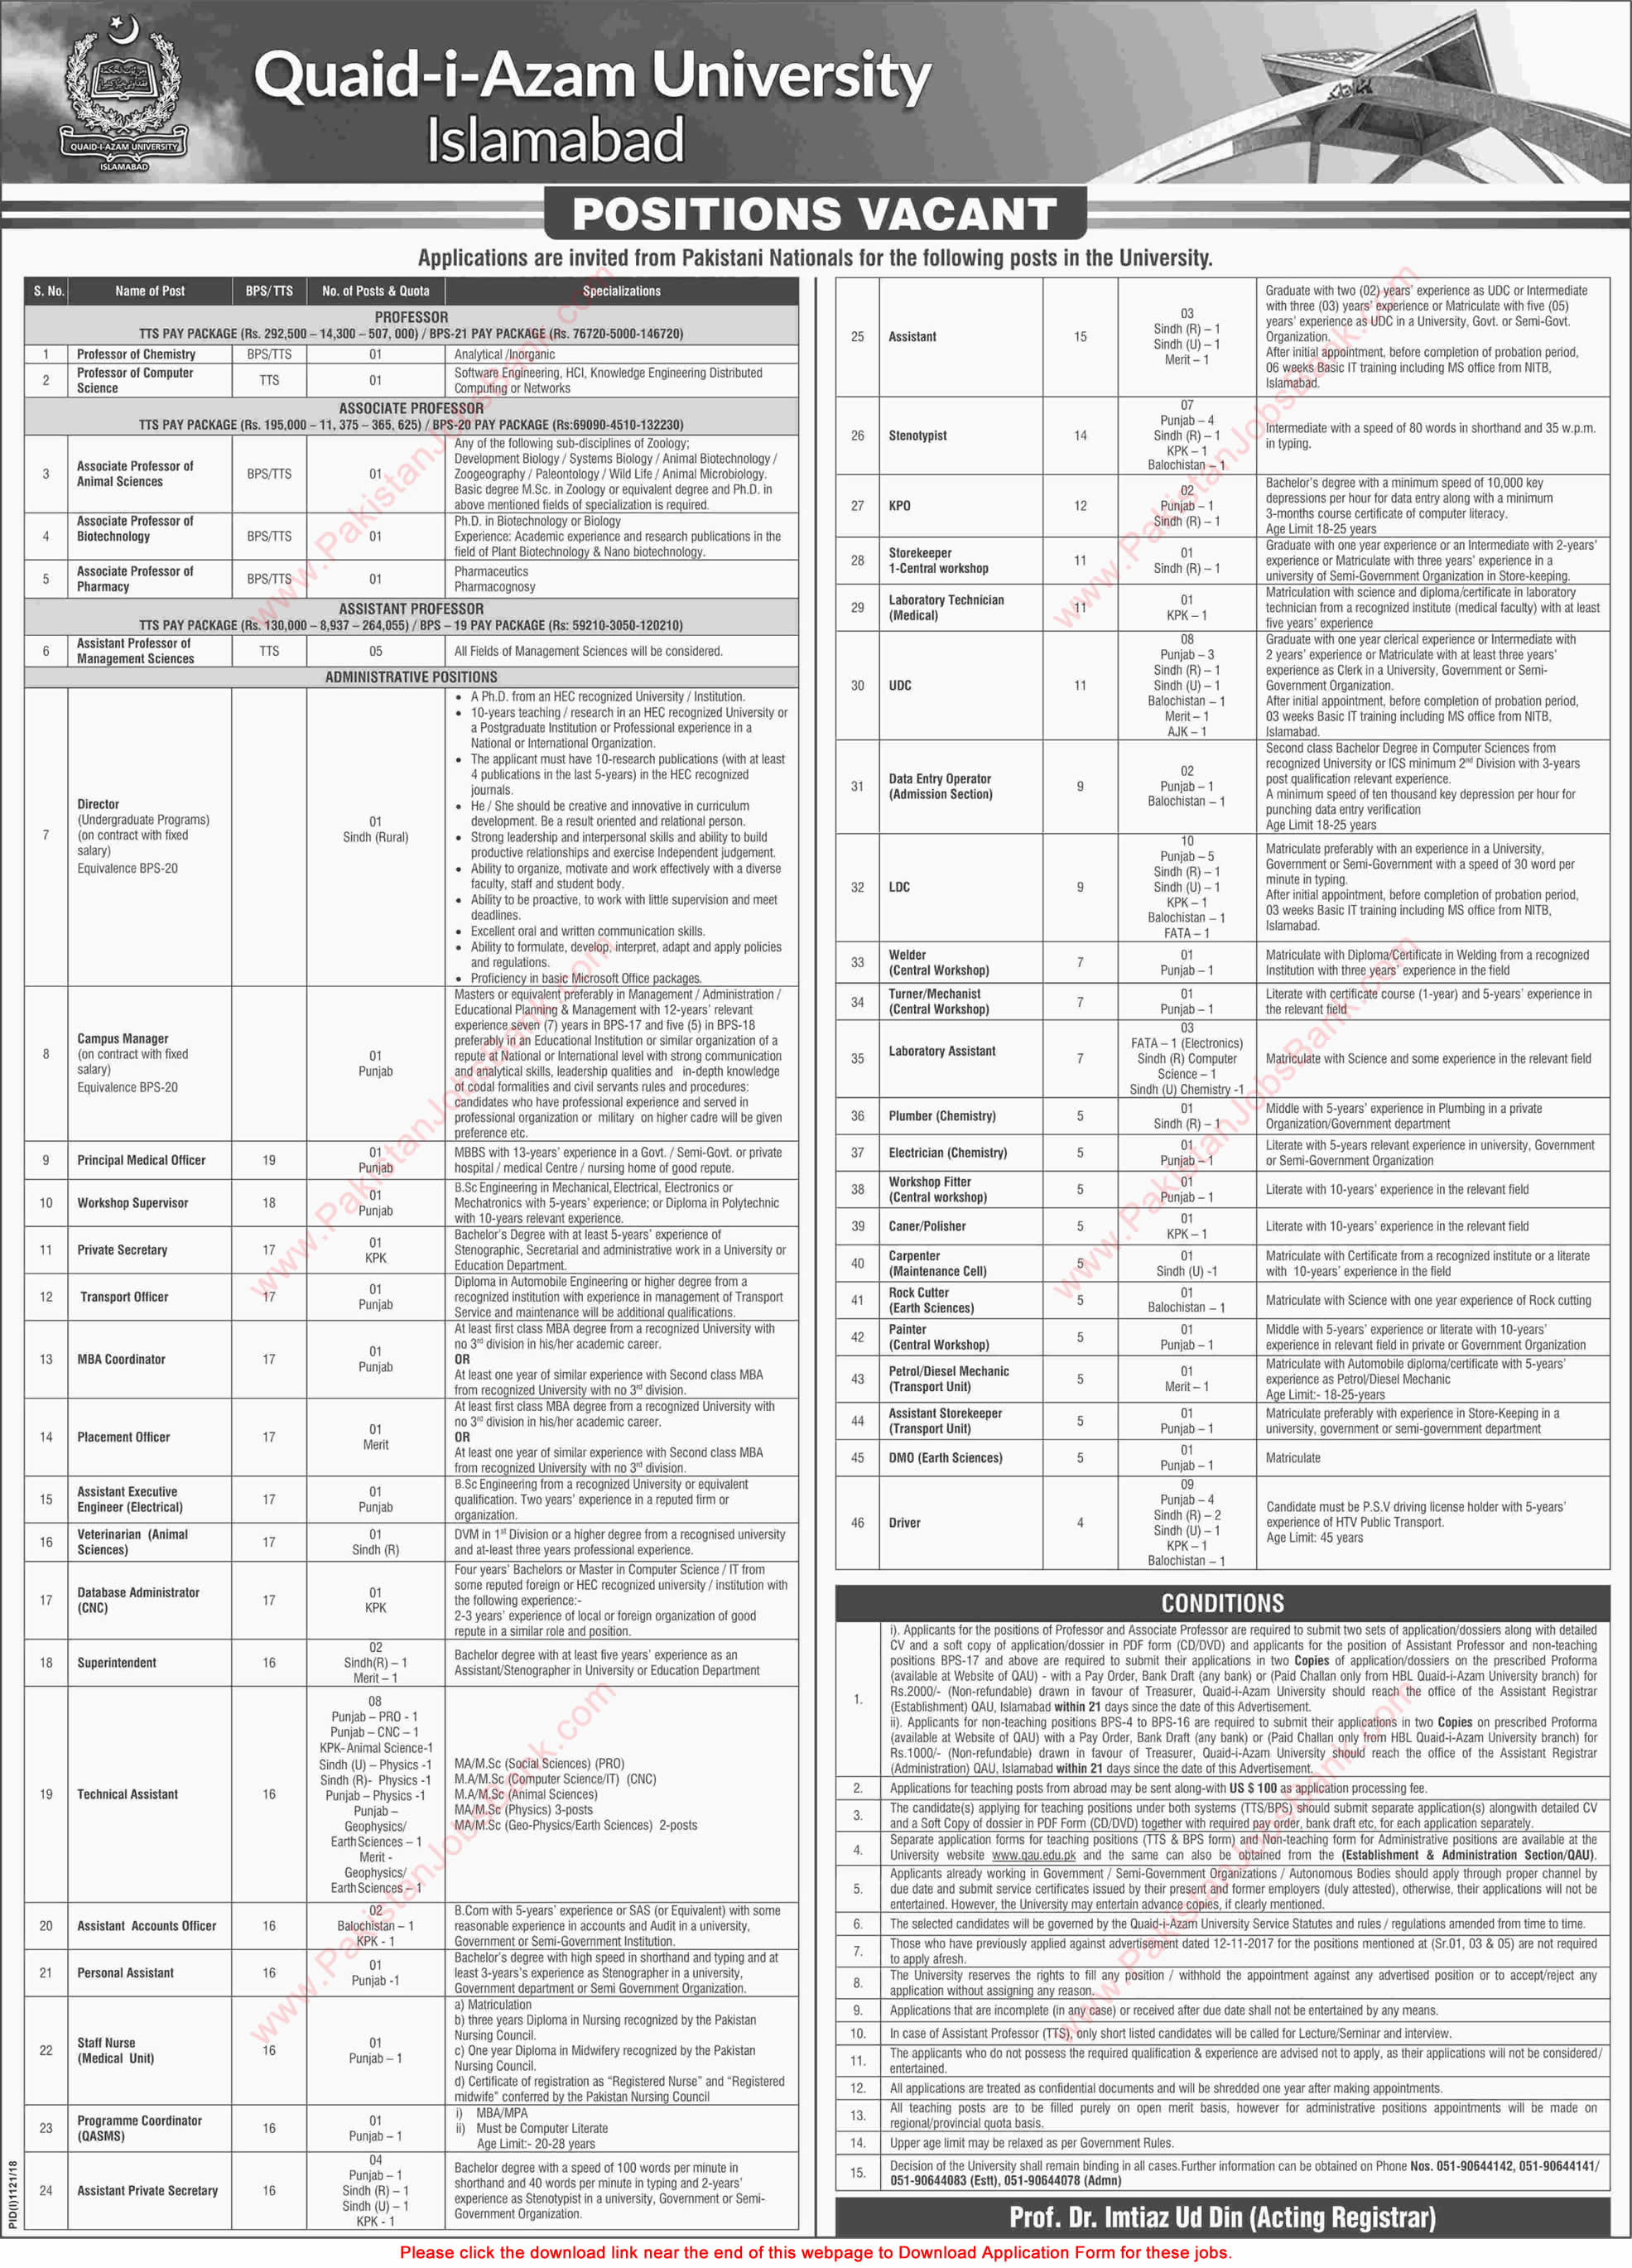 Quaid-e-Azam University Islamabad Jobs 2018 September Application Form Clerks, Technical Assistants & Others Latest